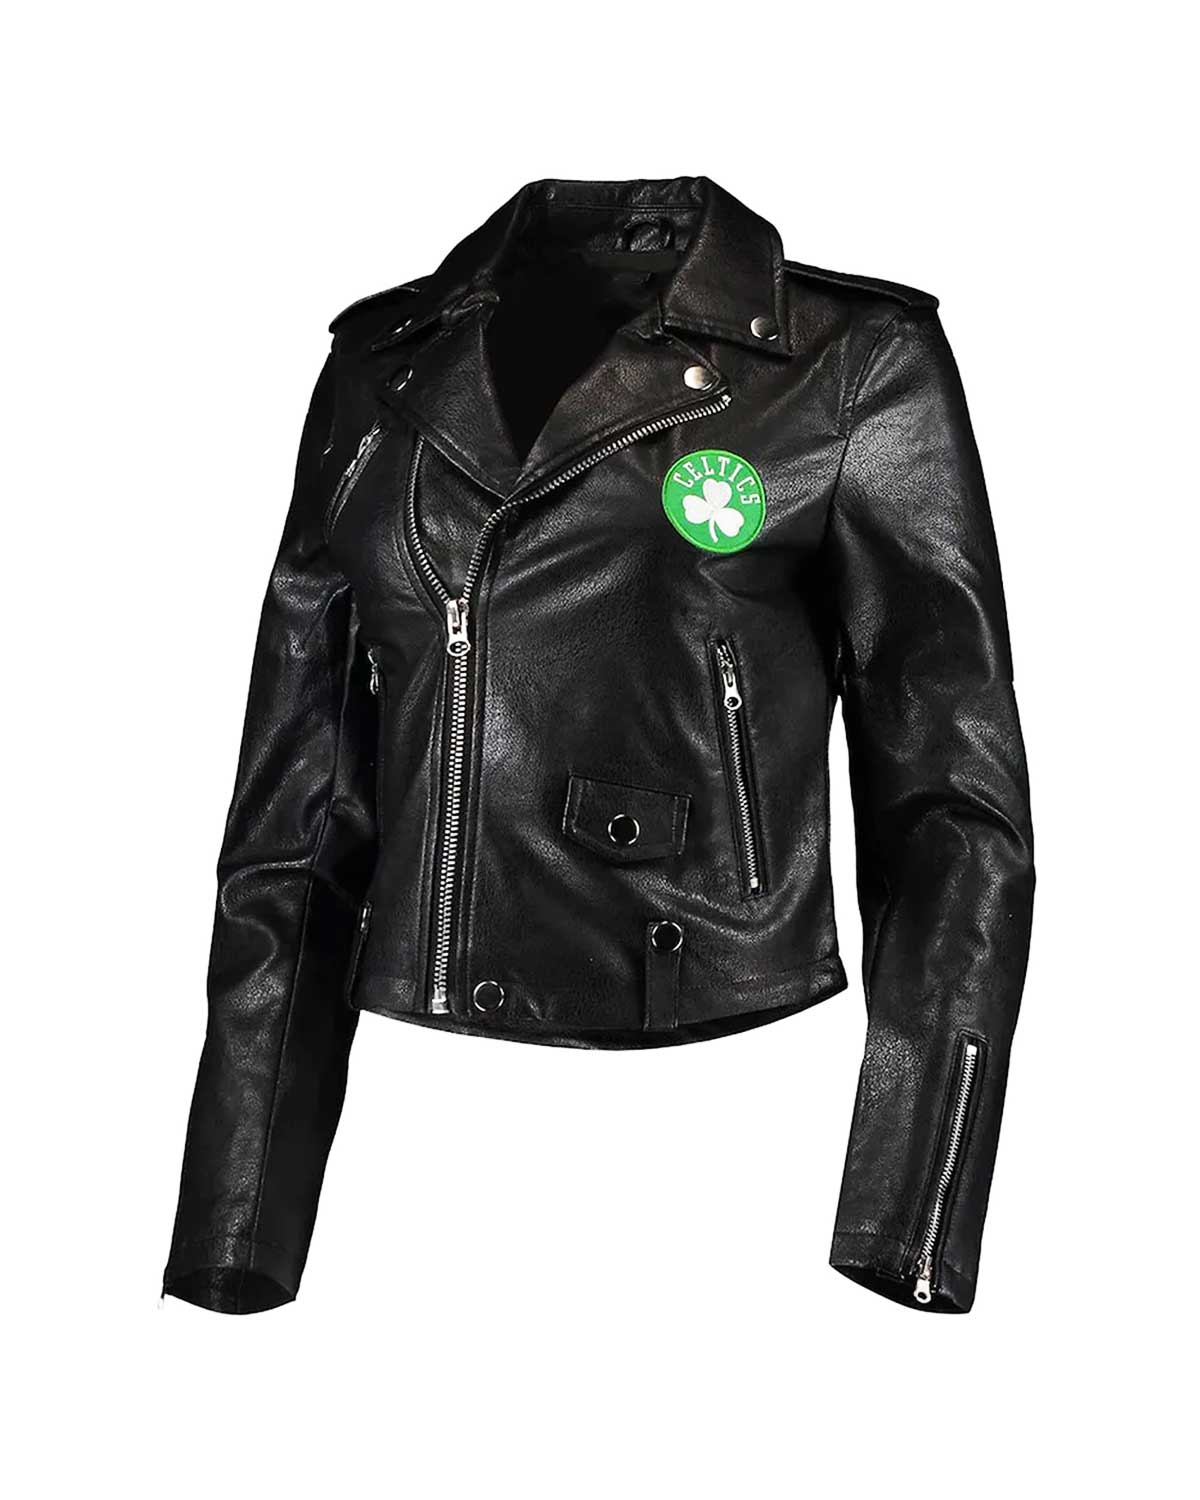 Boston Celtics Black Leather Biker Jacket | Elite Jacket